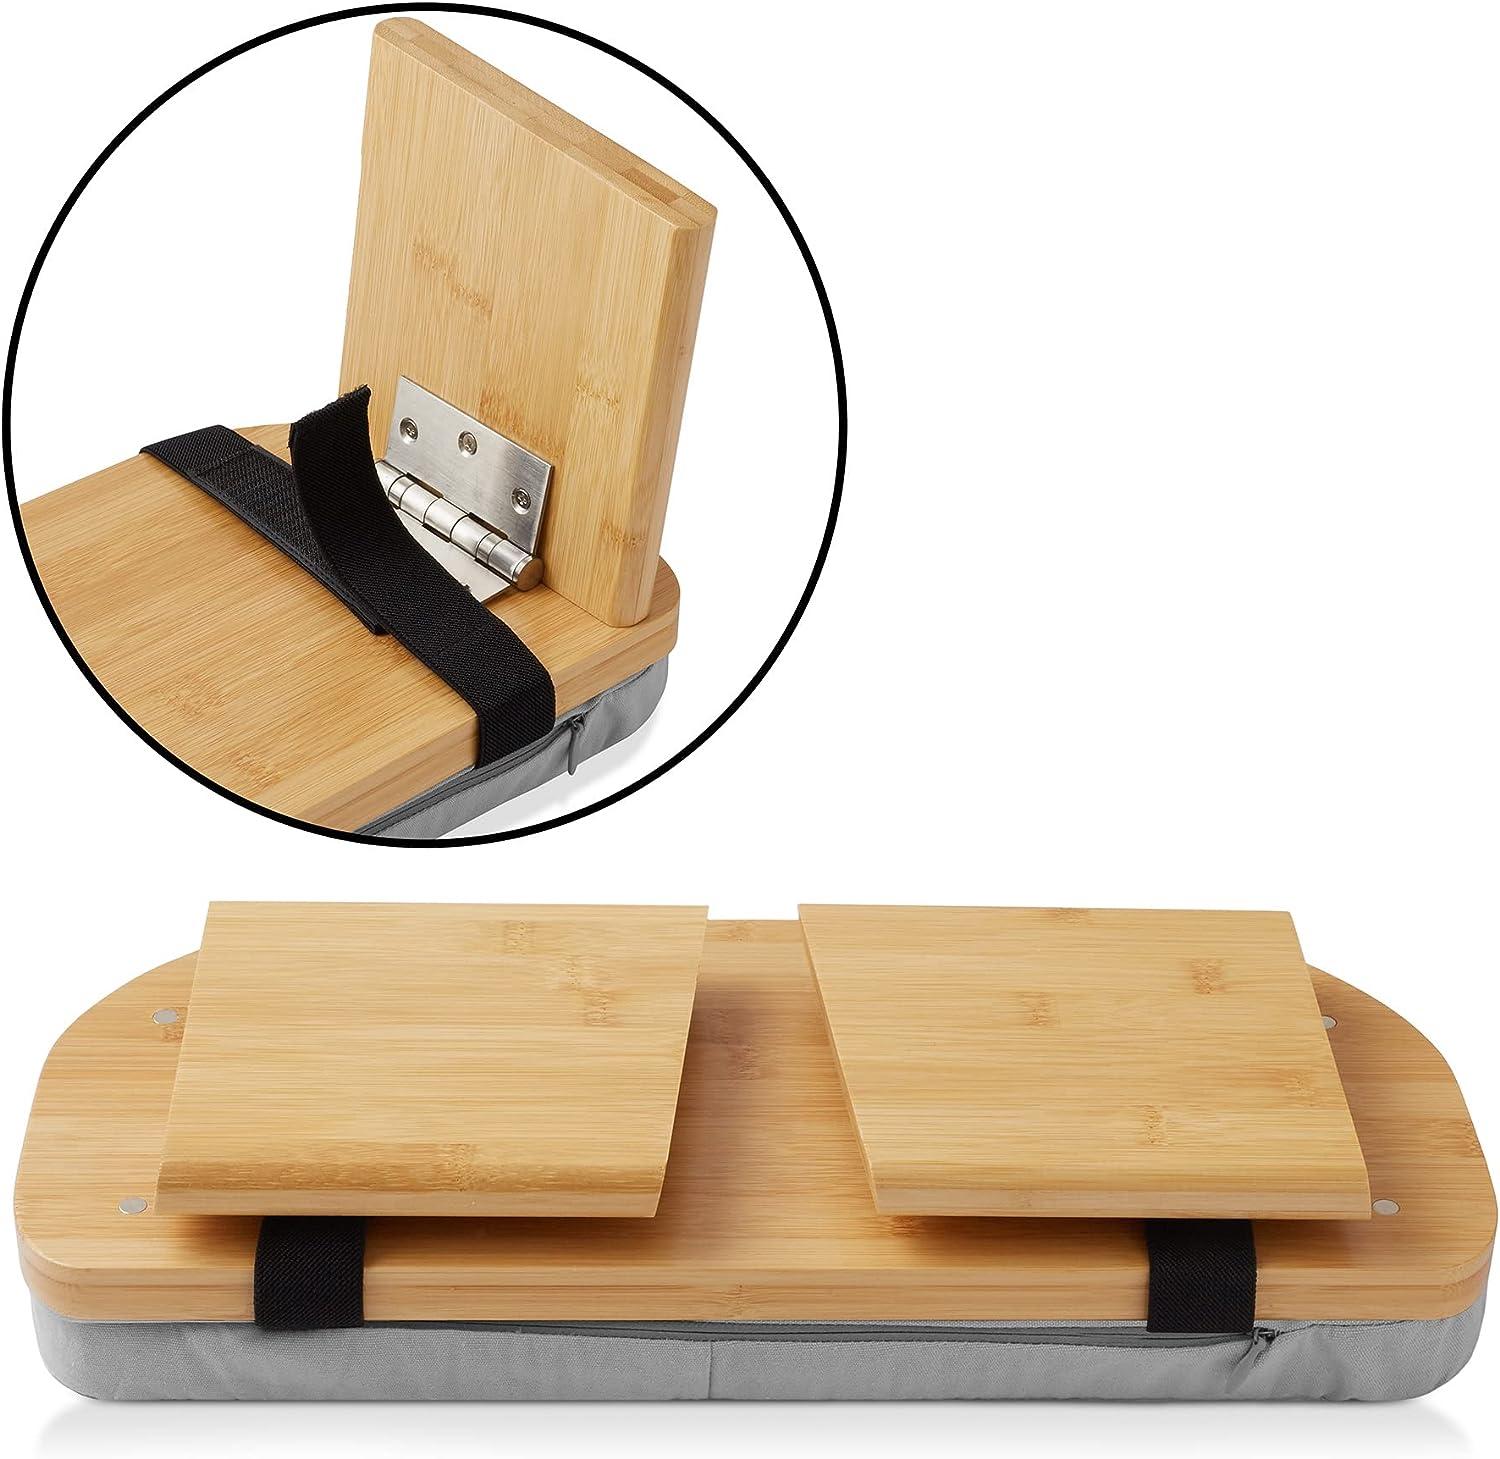 Padded Meditation Bench, Folding Seat With Cushion, Bamboo Seiza